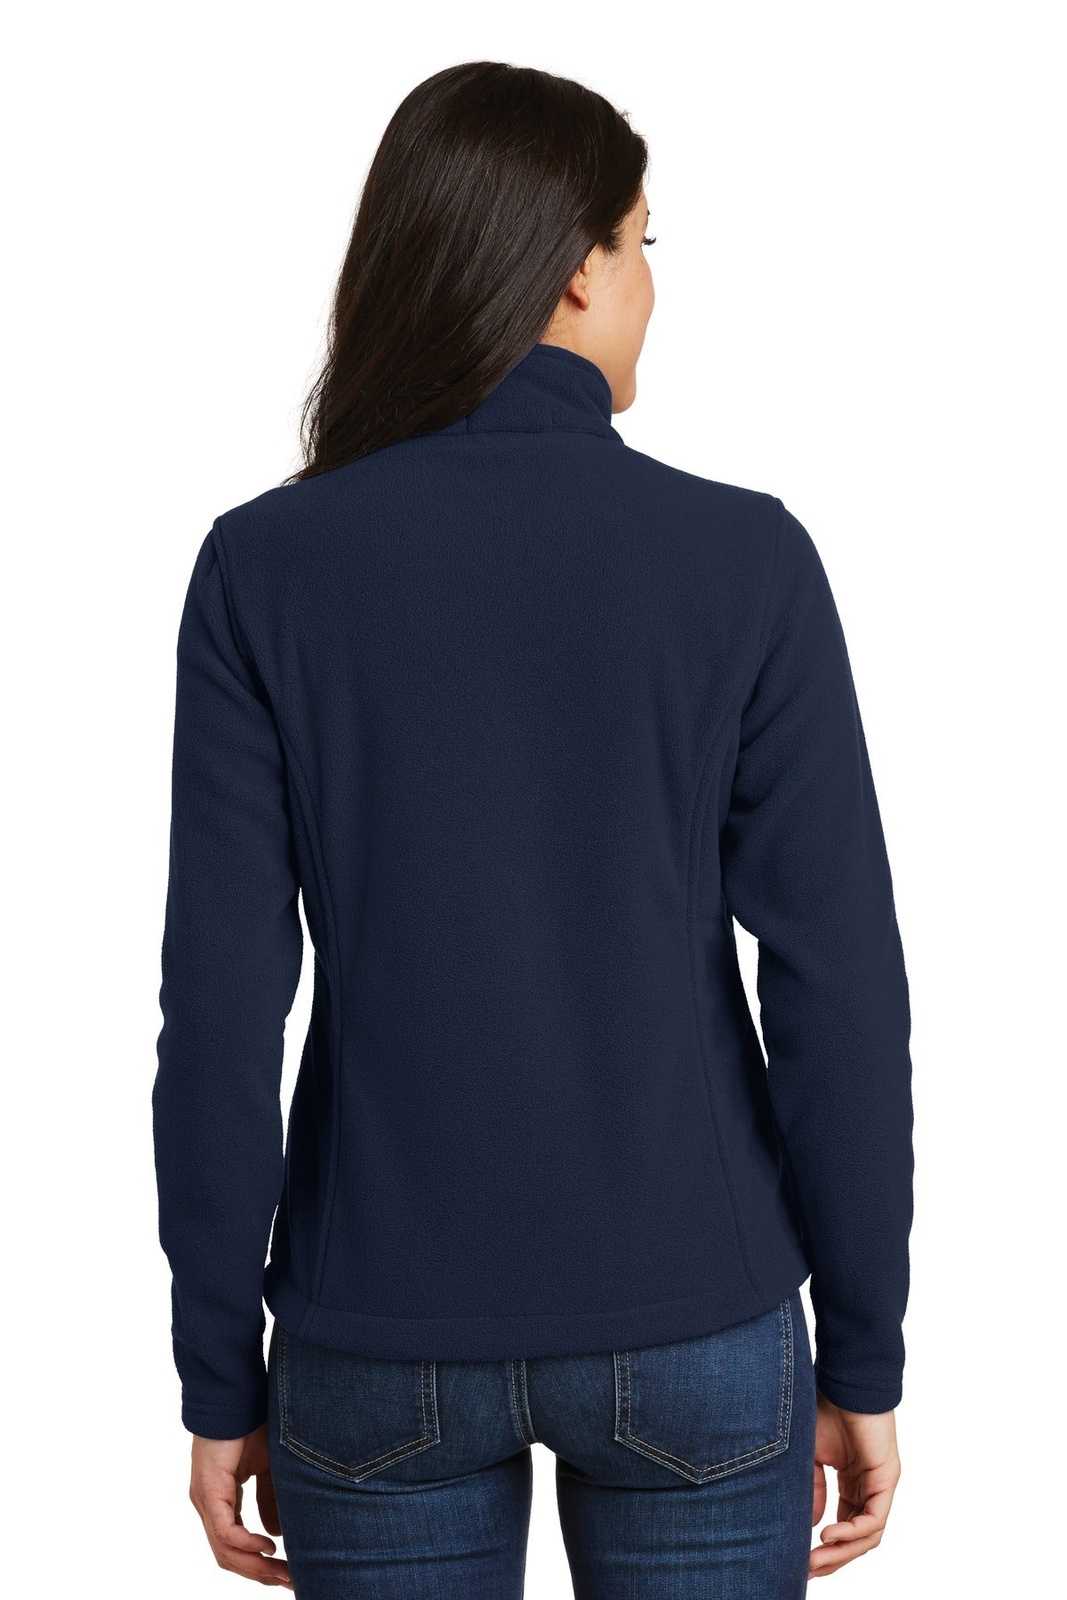 Port Authority L217 Ladies Value Fleece Jacket - True Navy - HIT a Double - 2